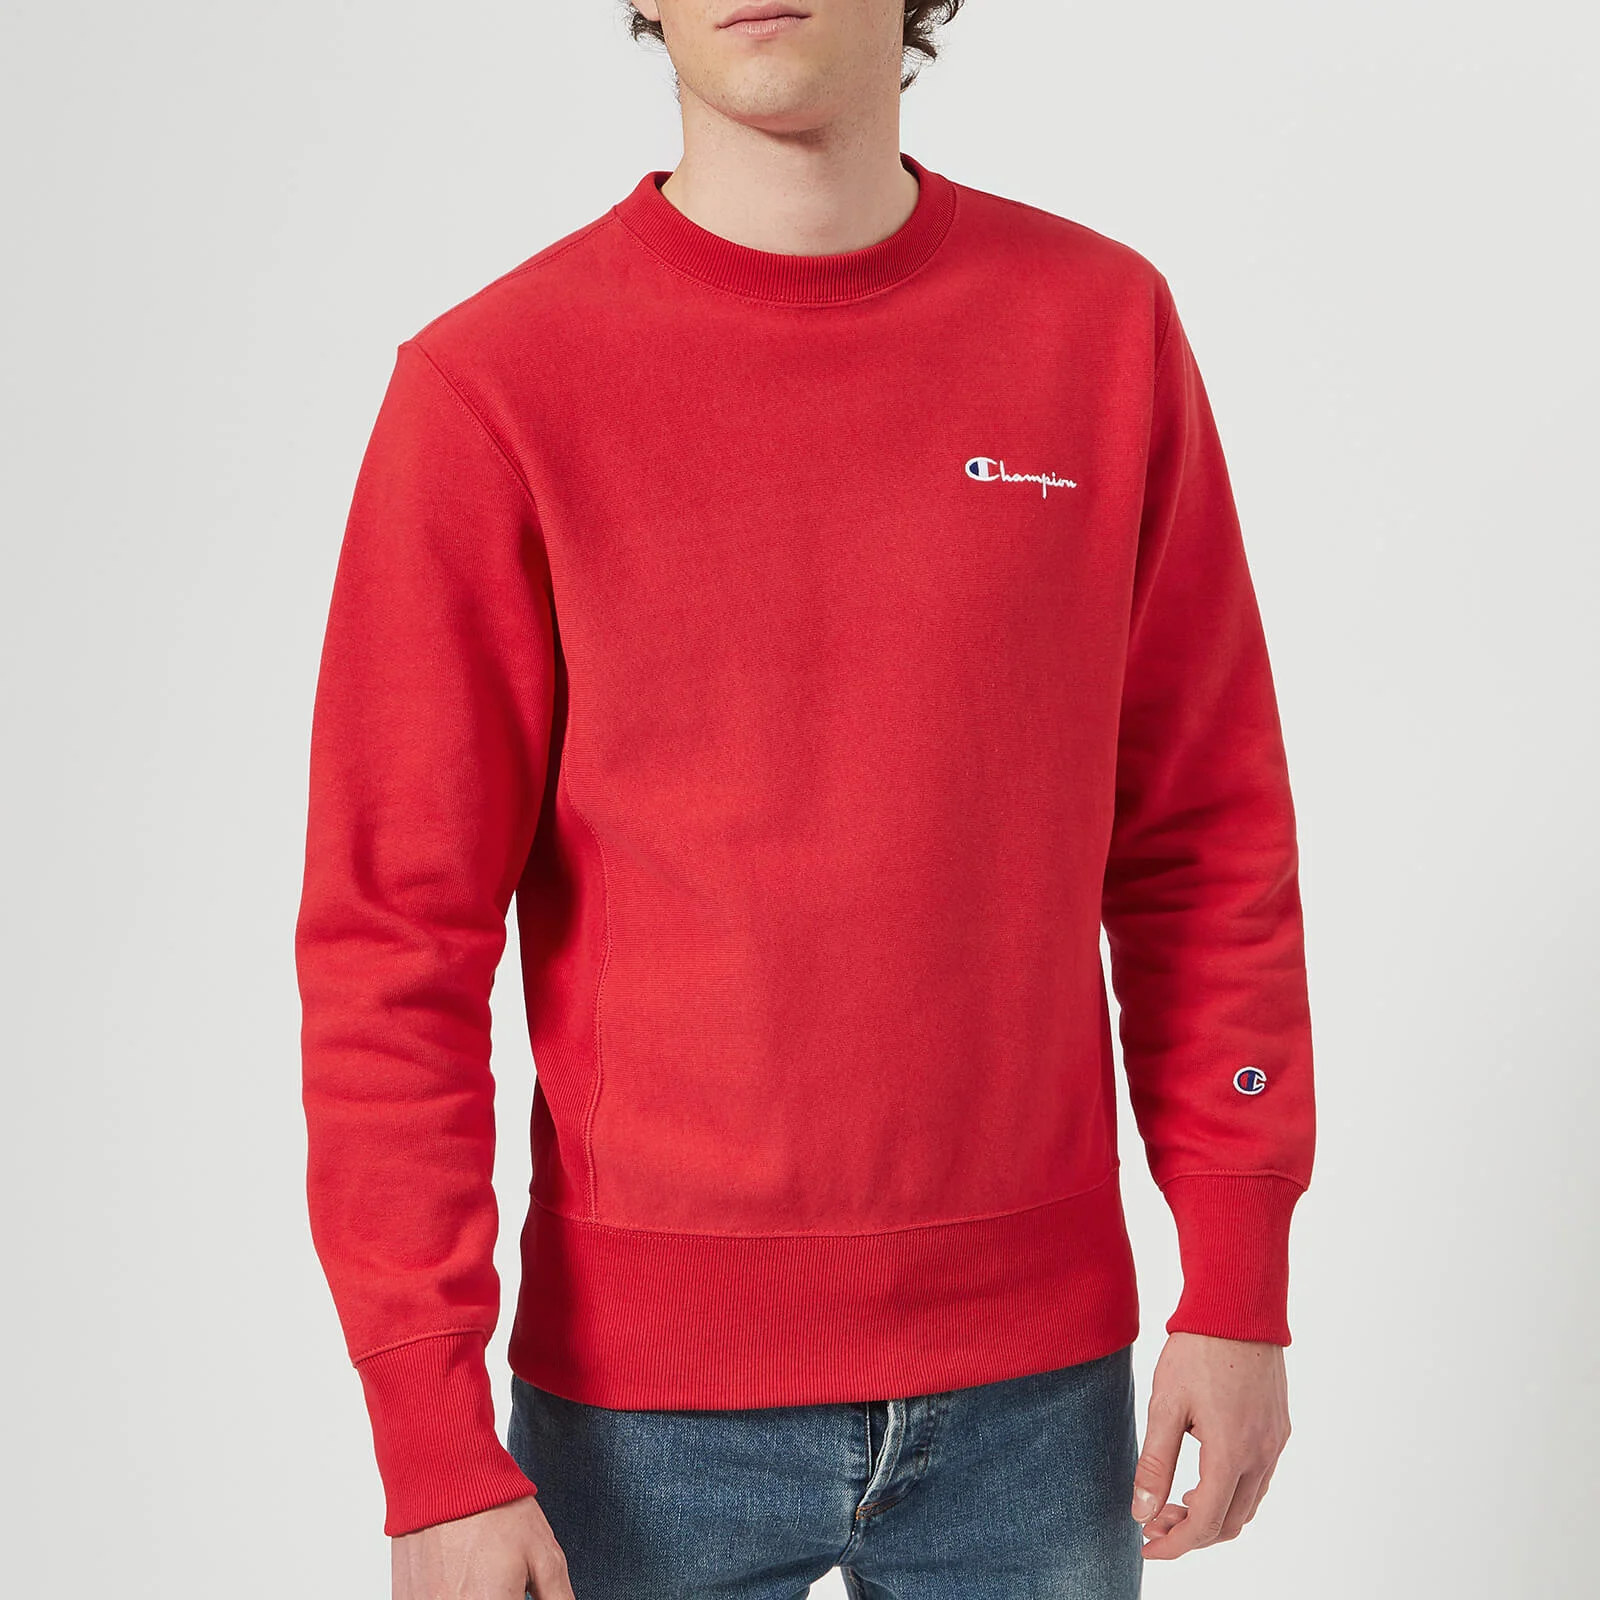 Champion Men's Crew Neck Sweatshirt - Red Image 1